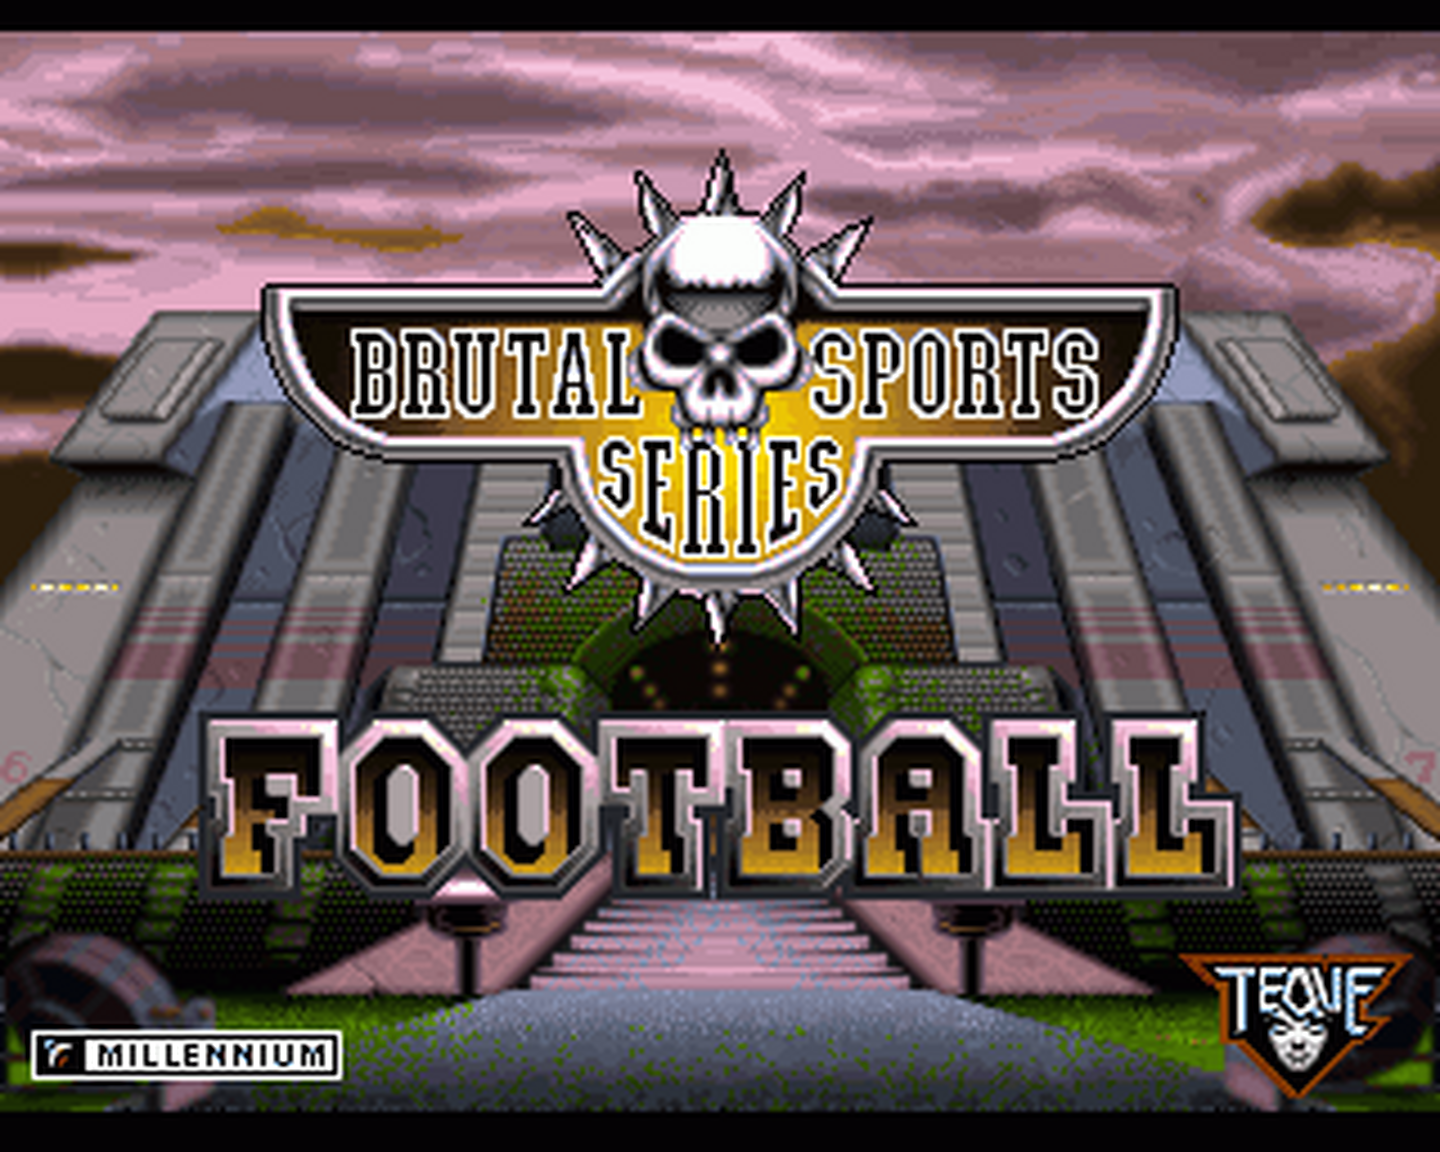 Amiga GameBase Brutal_Football_-_Deluxe_Edition_(AGA) Millennium 1993